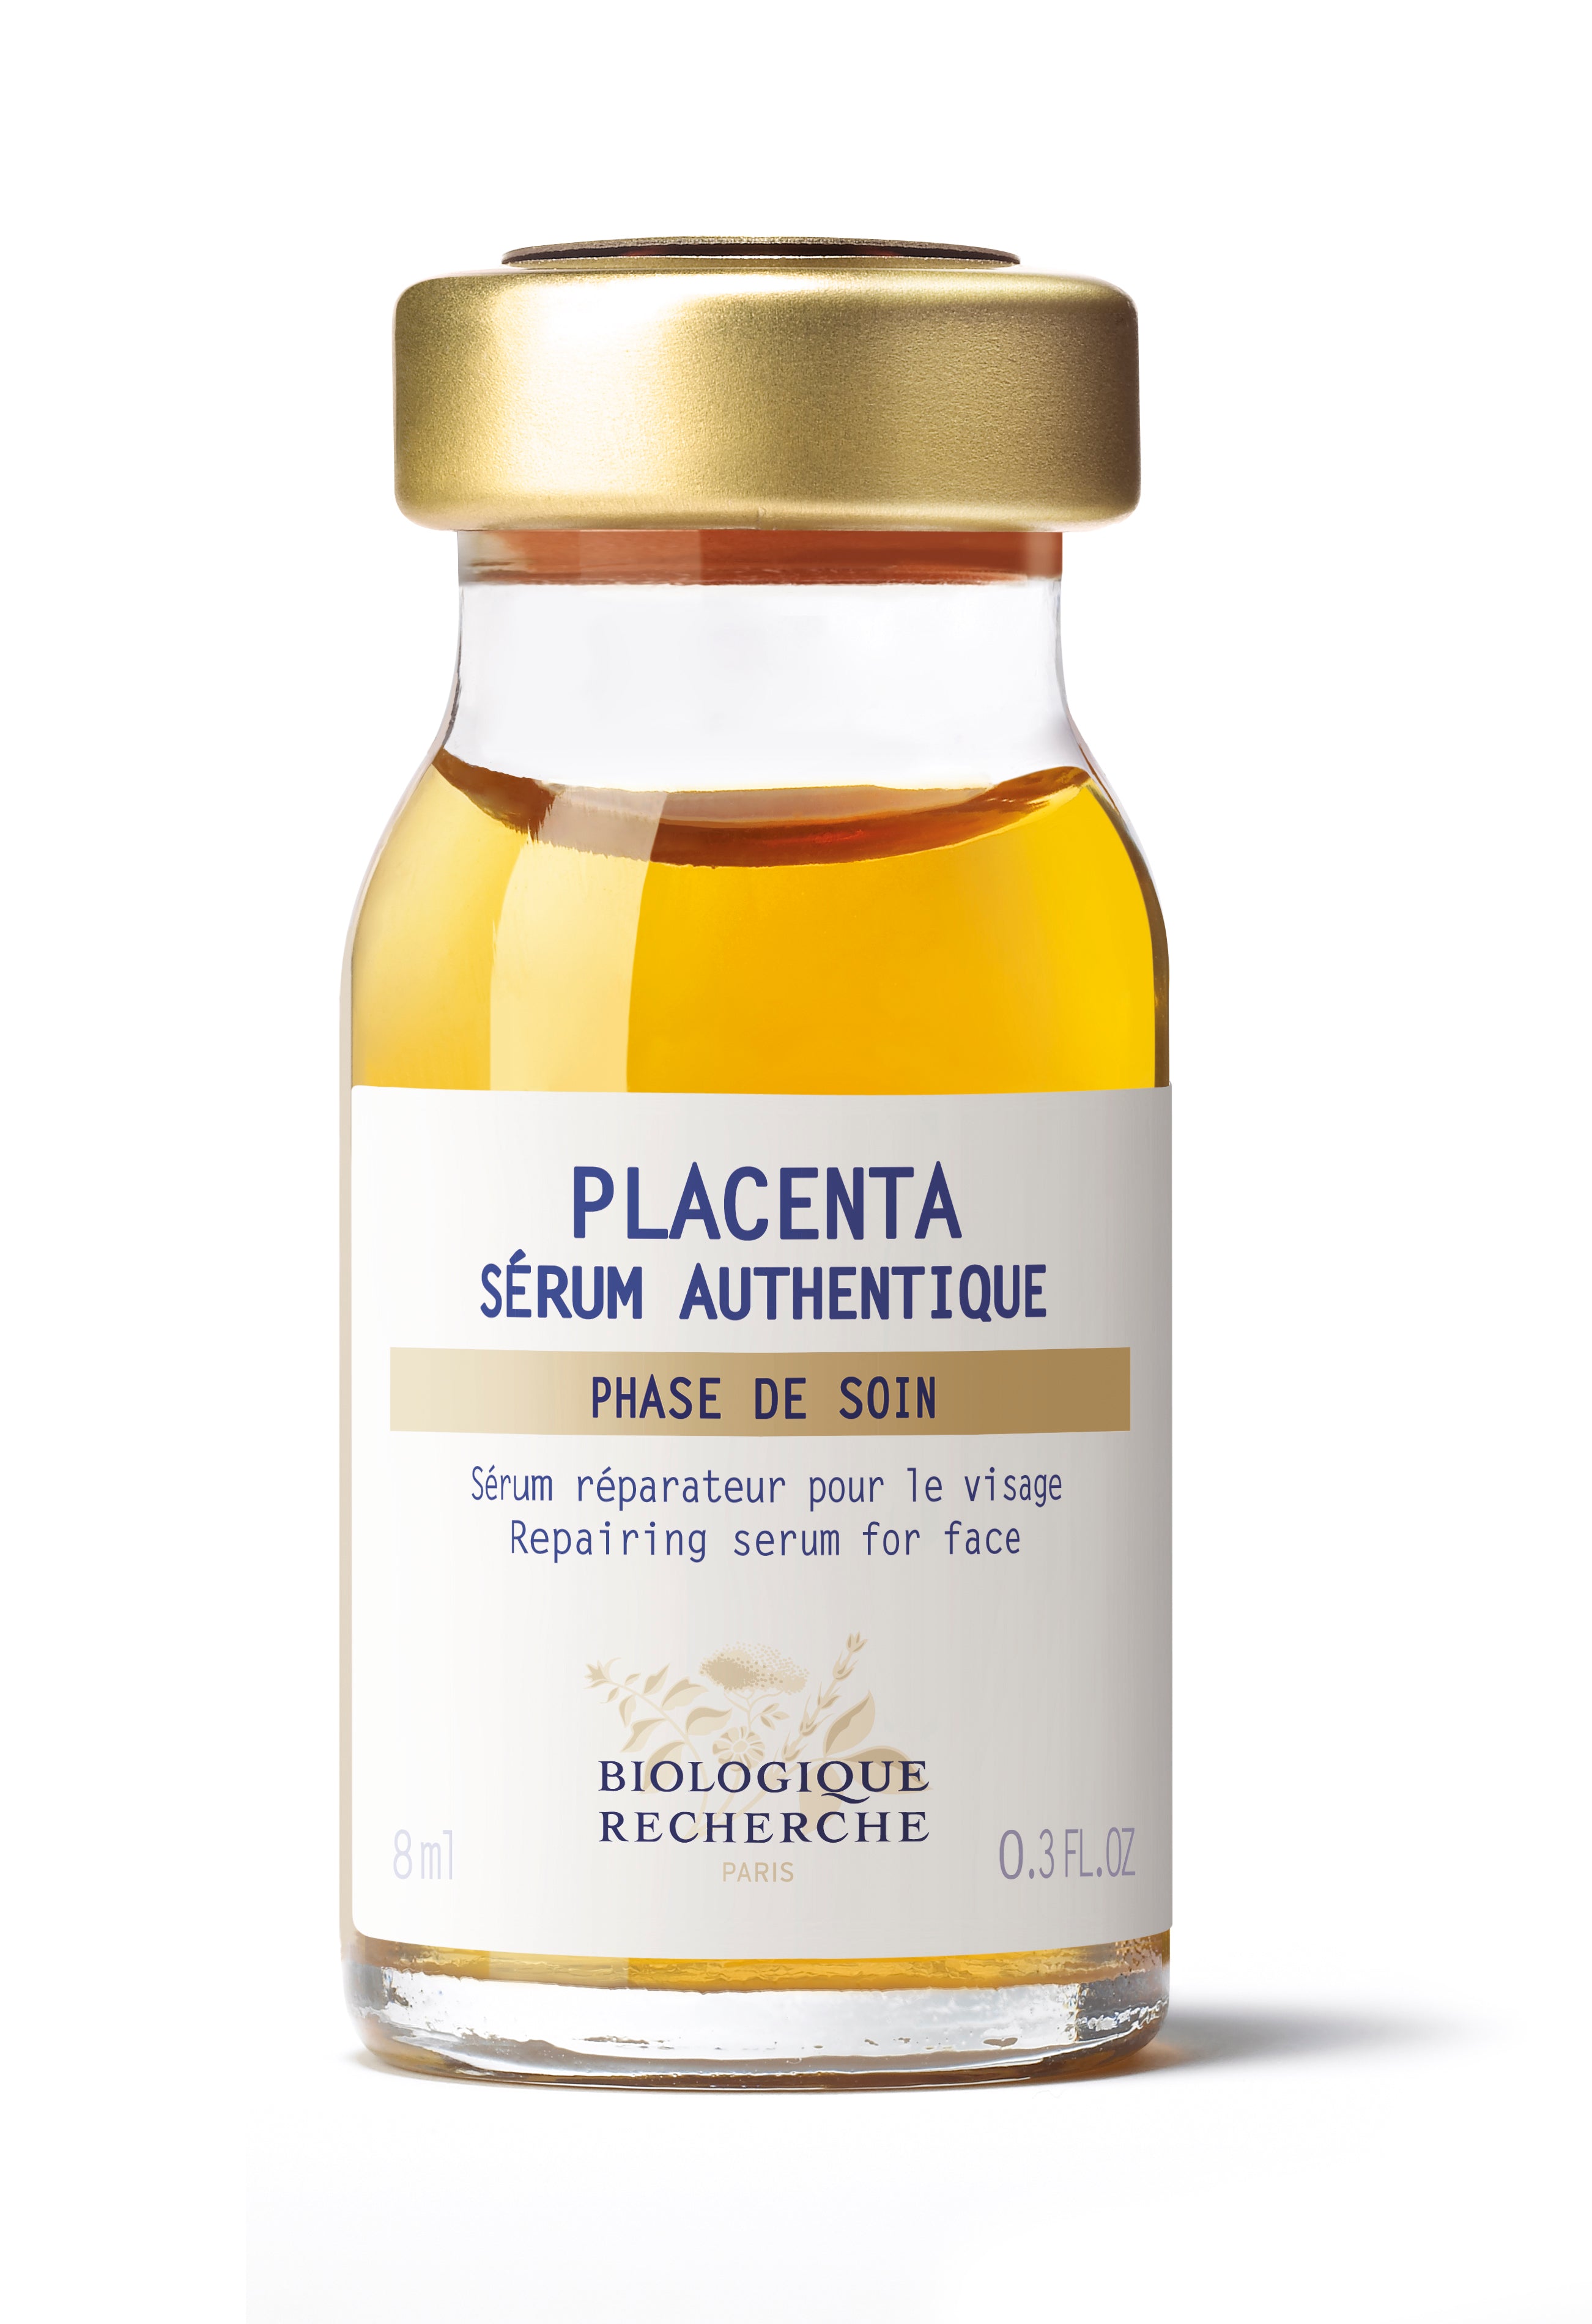 Biologique Recherche Serum Placenta | Post Acne Tretament | Original - Paul Labrecque